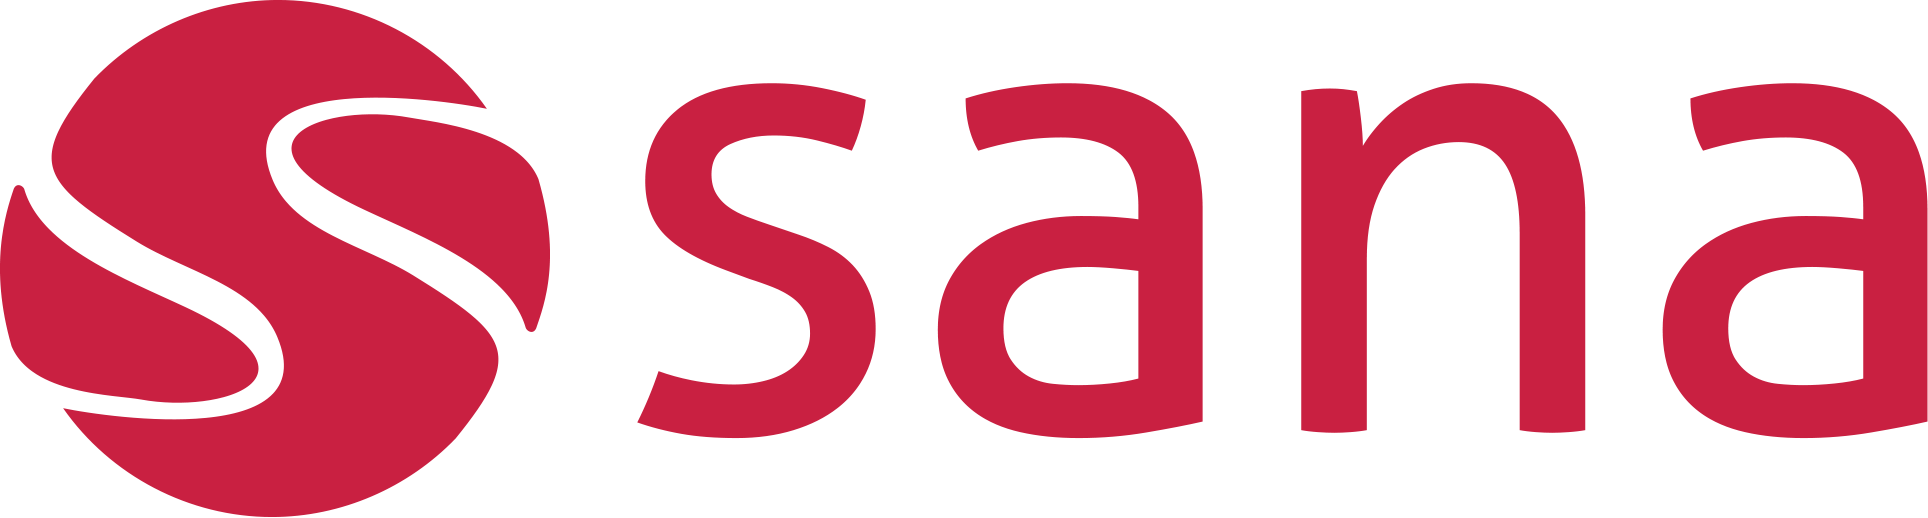 Sanarp Logo photo - 1